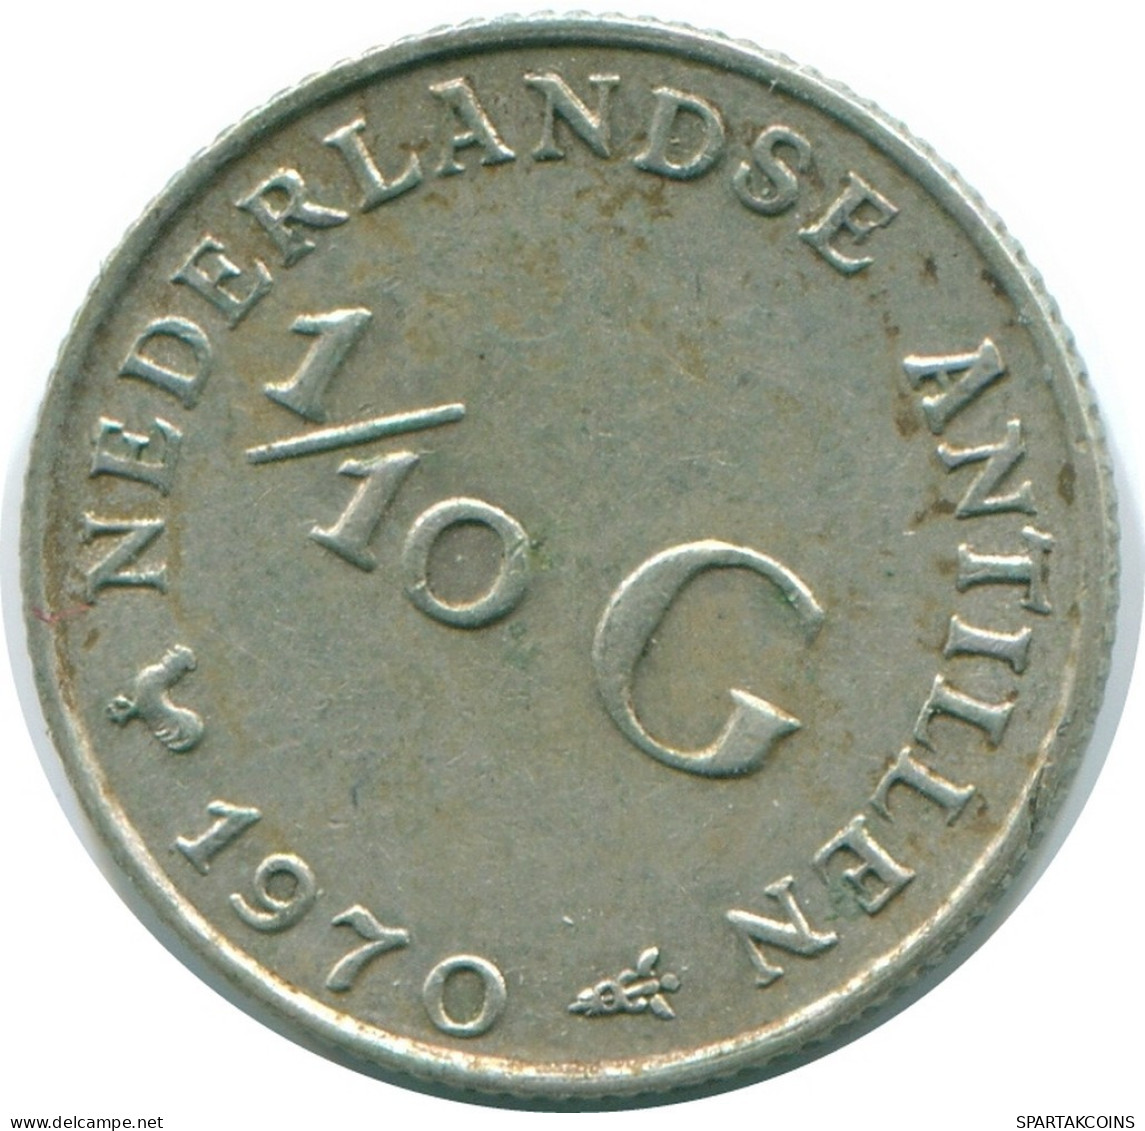 1/10 GULDEN 1970 NETHERLANDS ANTILLES SILVER Colonial Coin #NL13055.3.U.A - Antille Olandesi